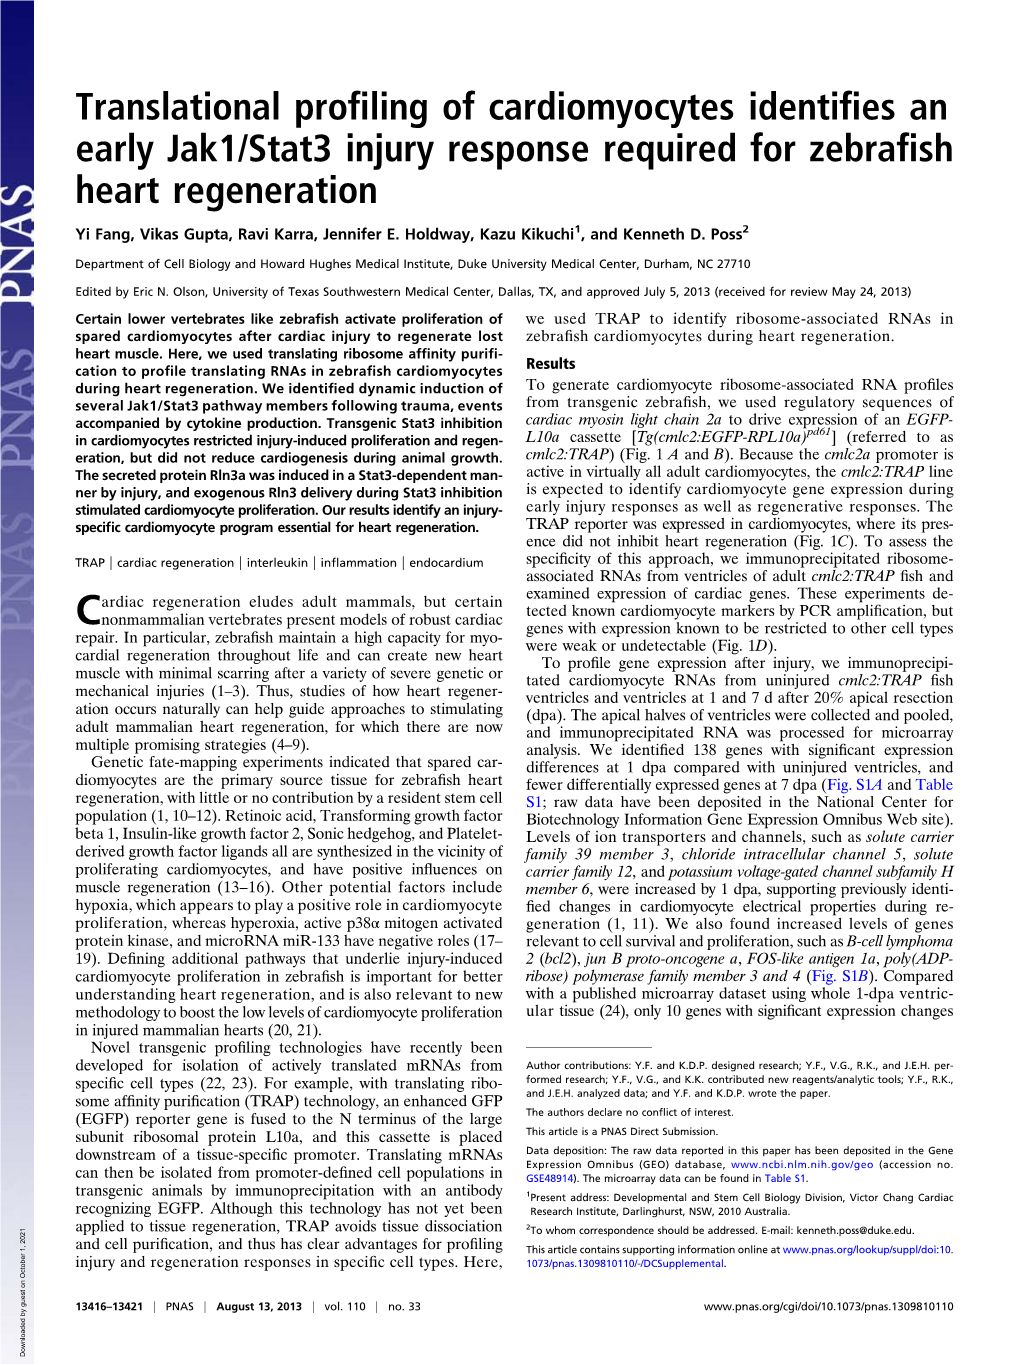 Translational Profiling of Cardiomyocytes Identifies an Early Jak1/Stat3 Injury Response Required for Zebrafish Heart Regenerati